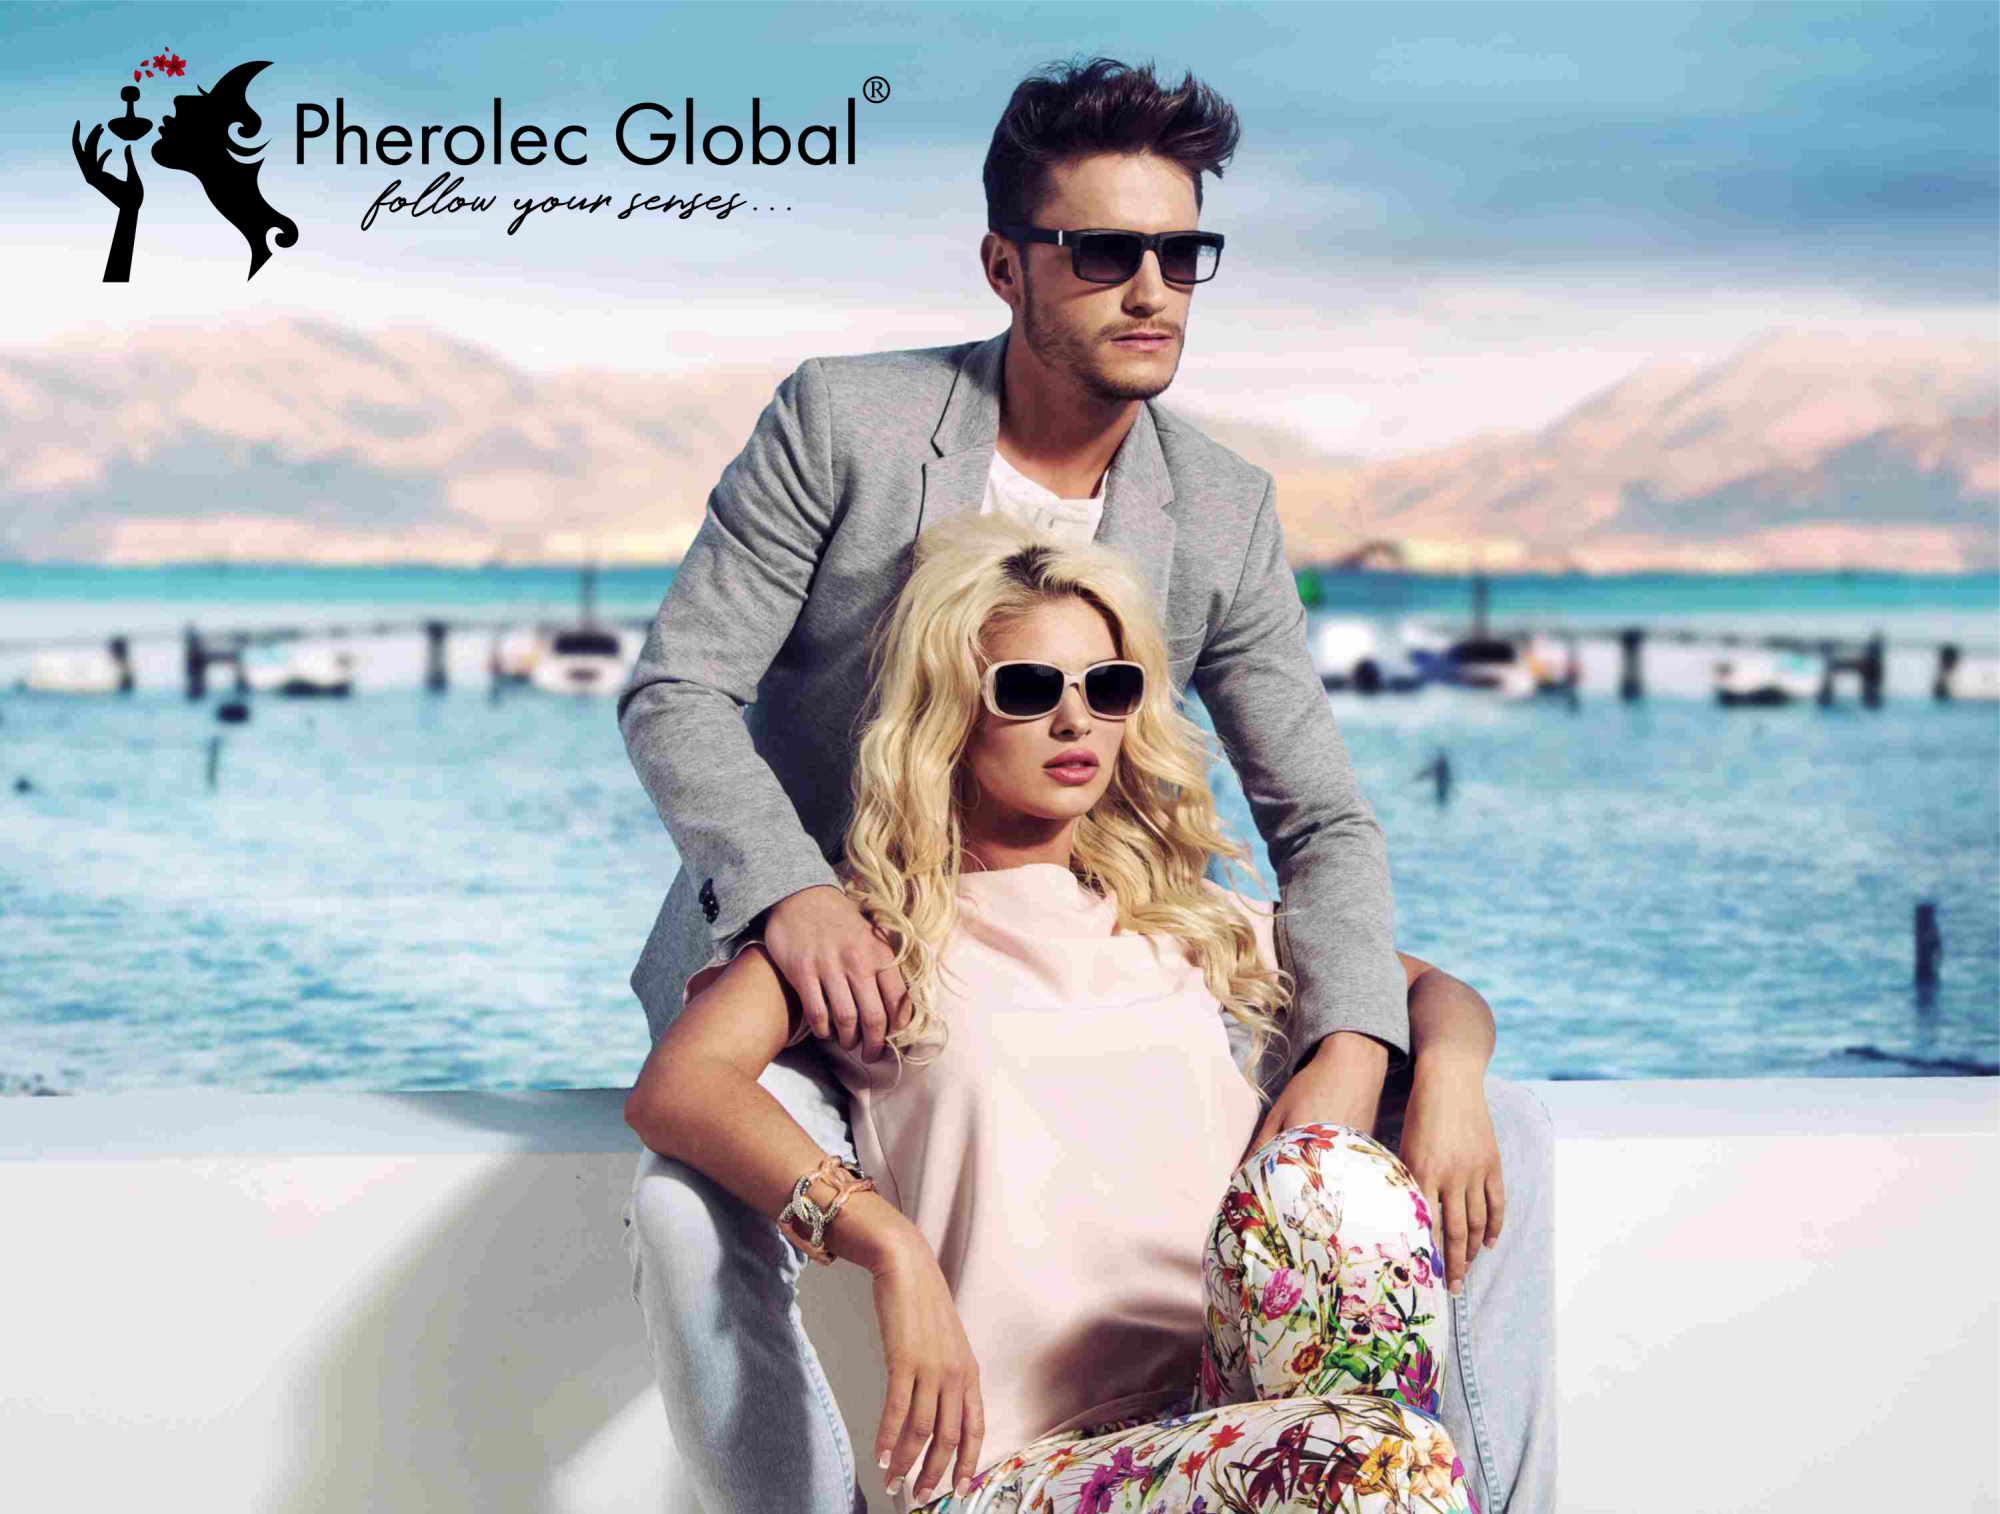 pherolec global best pheromone, pheromones for men and women, highest quality